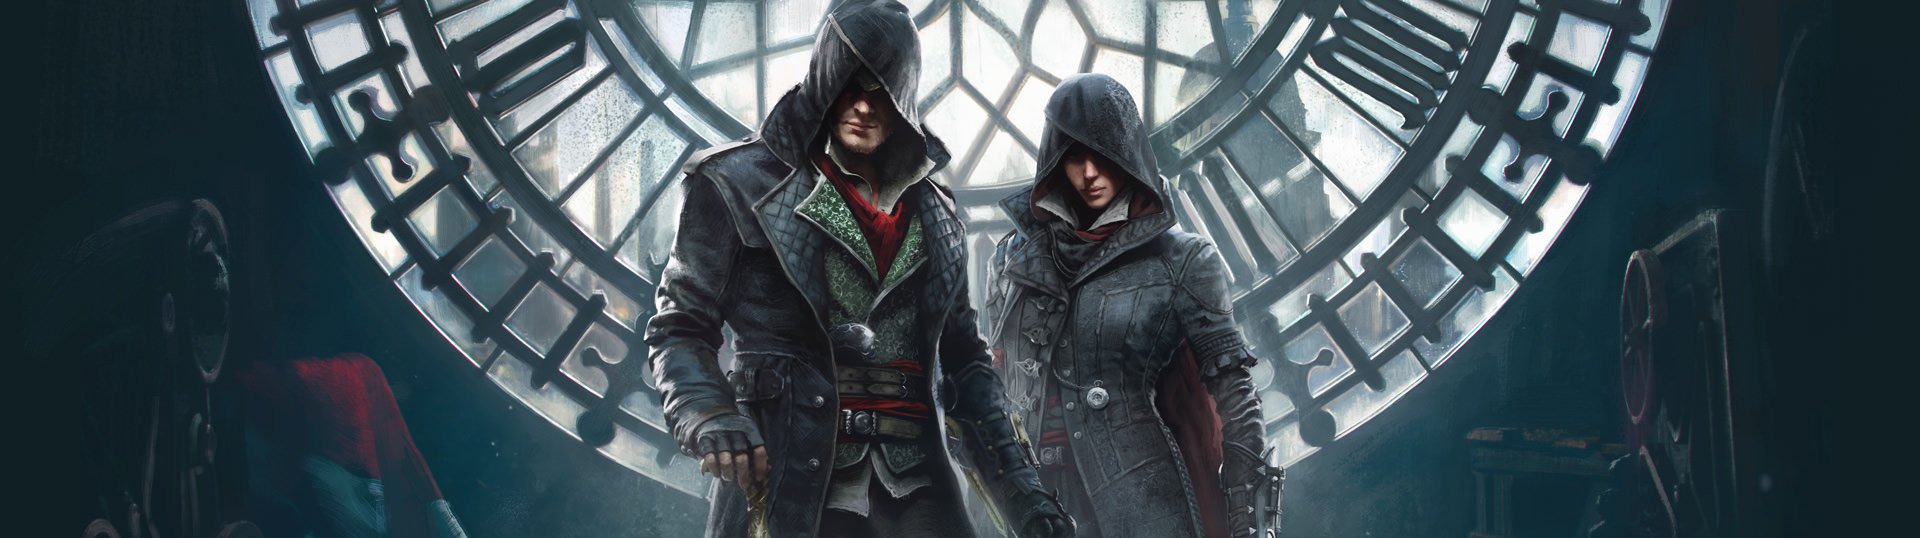 Assassin's Creed Syndicate - The Steampunk Assassins Epic Combat, Templar  Kills & Free Roam Chaos 